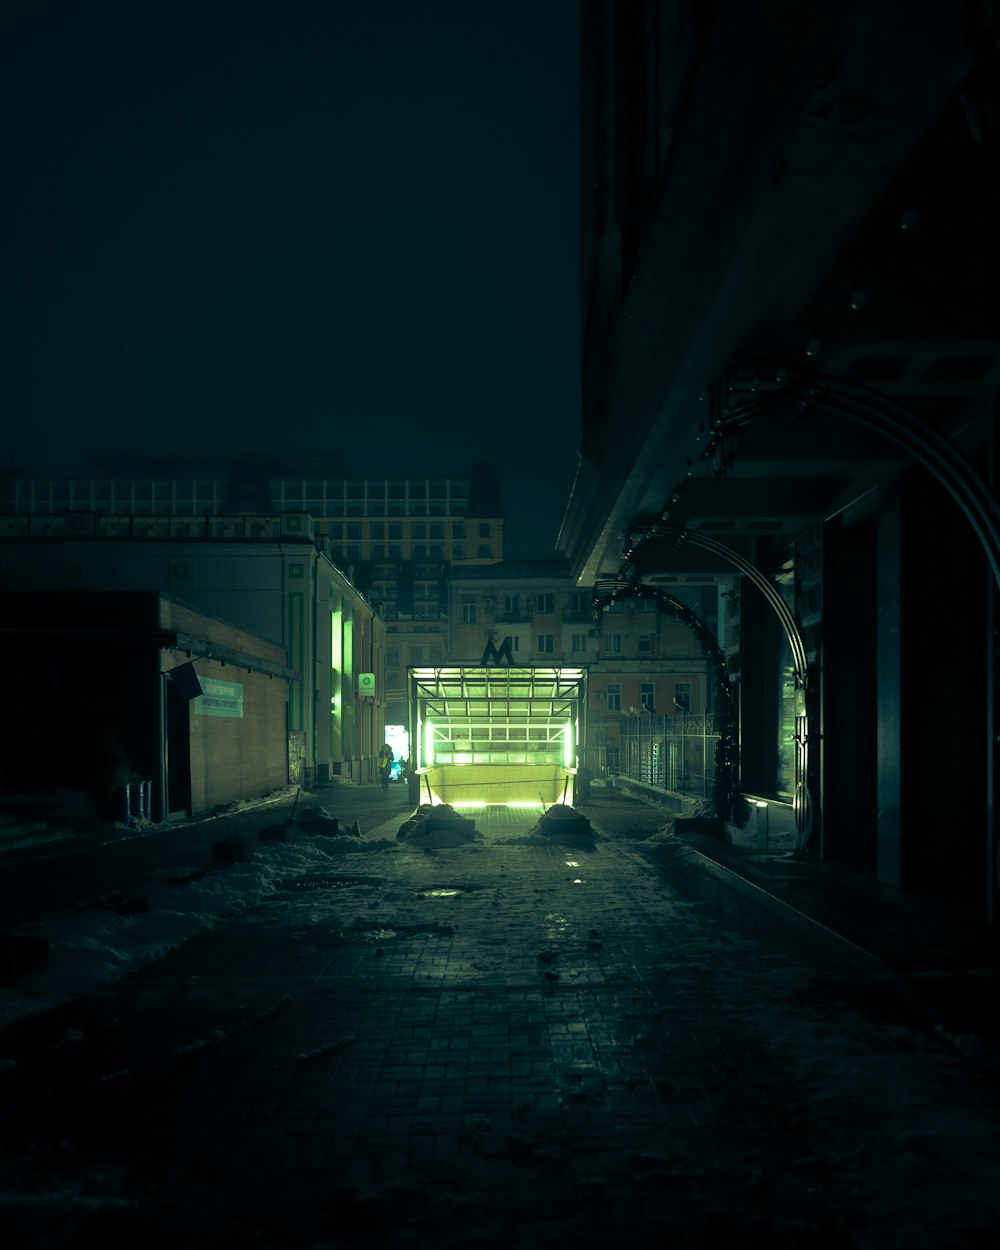 a street at night